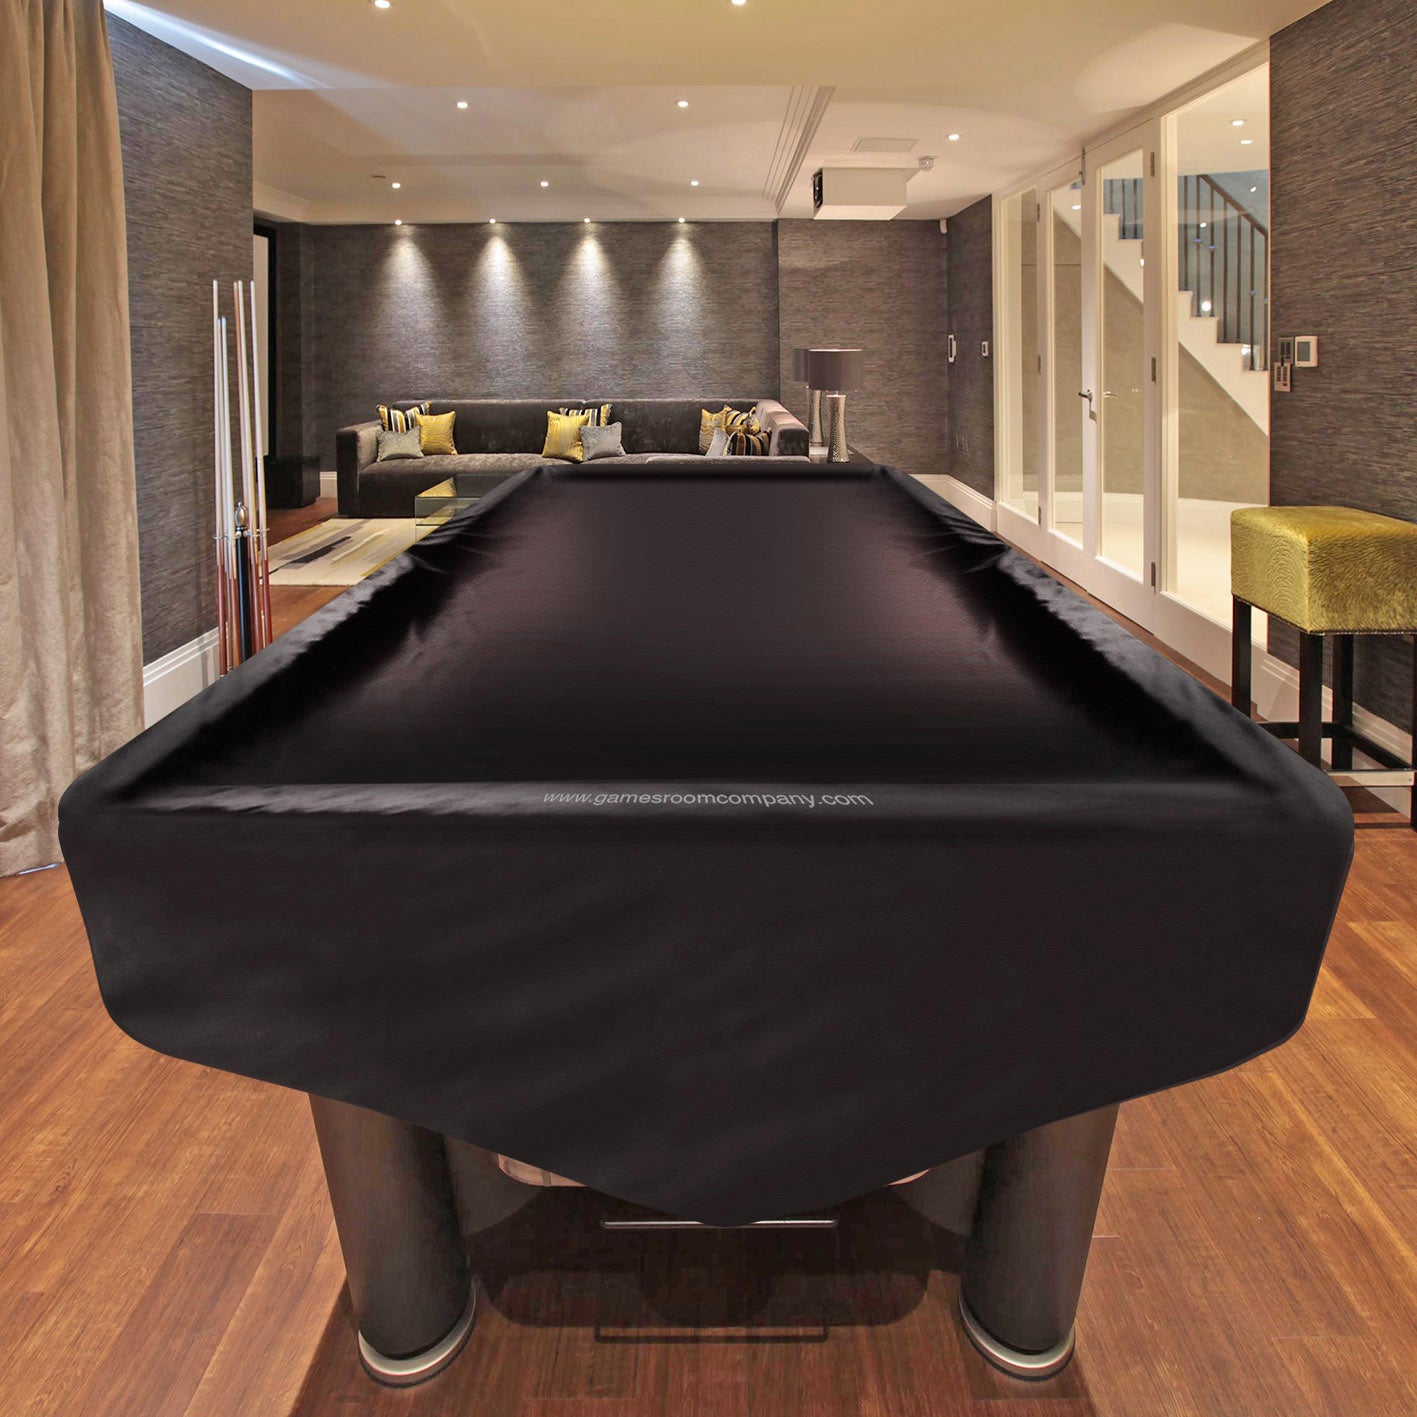 American pool table cover in black